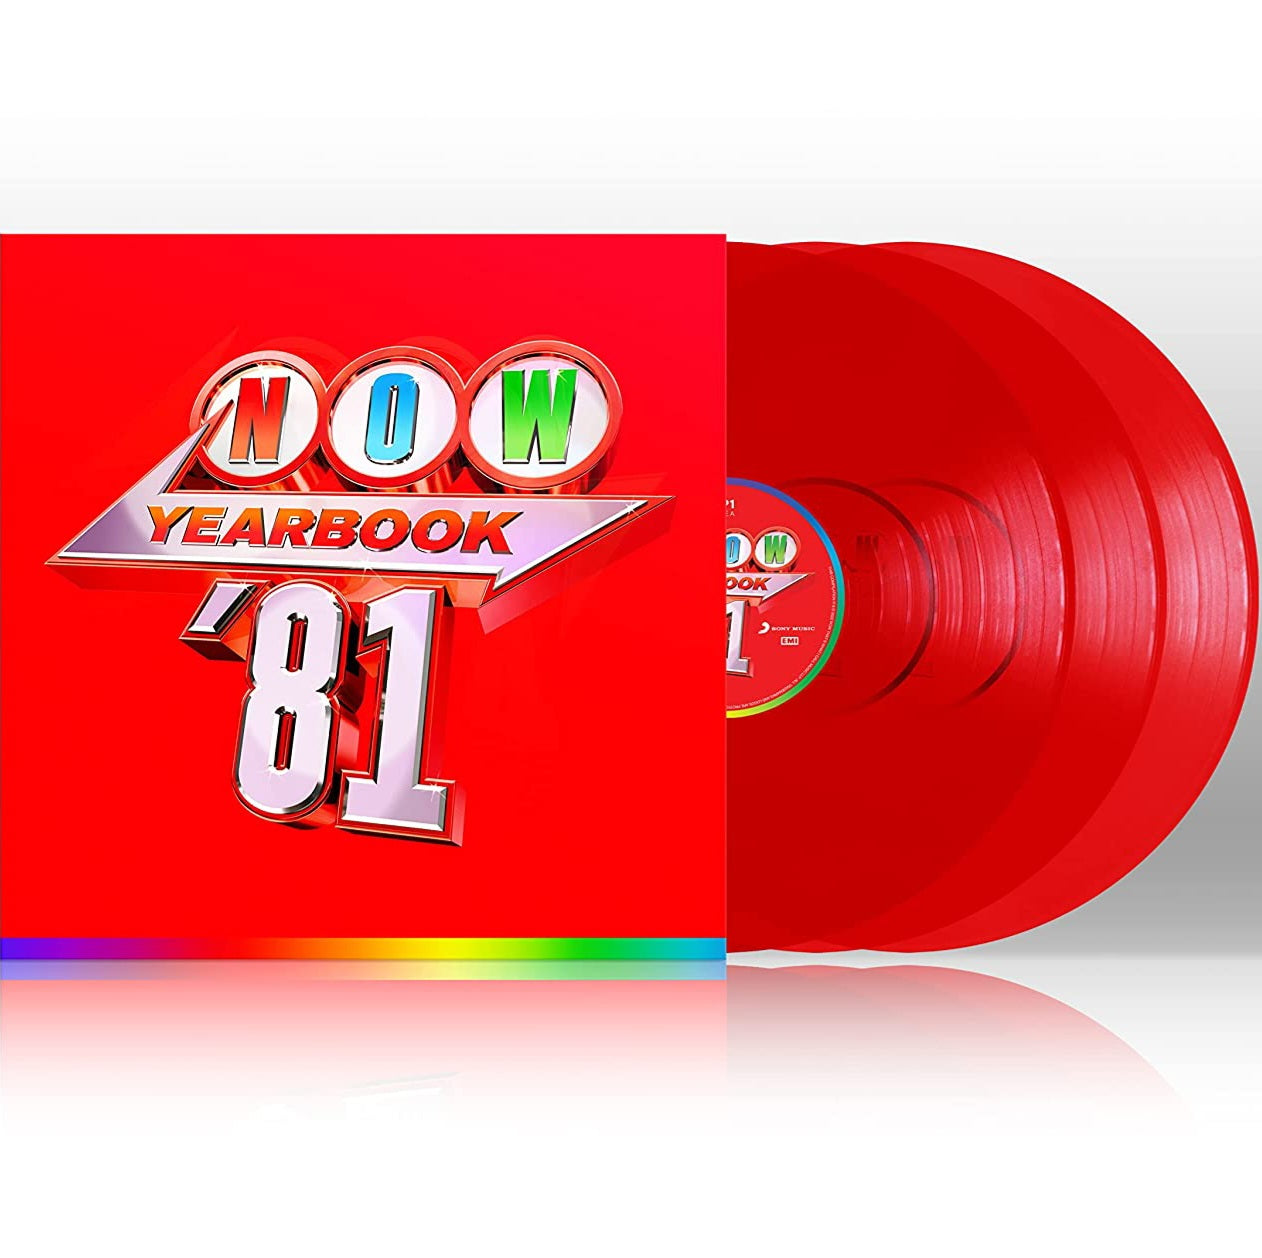 NOW_Yearbook_81_Red_Vinyl_3_Disc_LP.jpg?